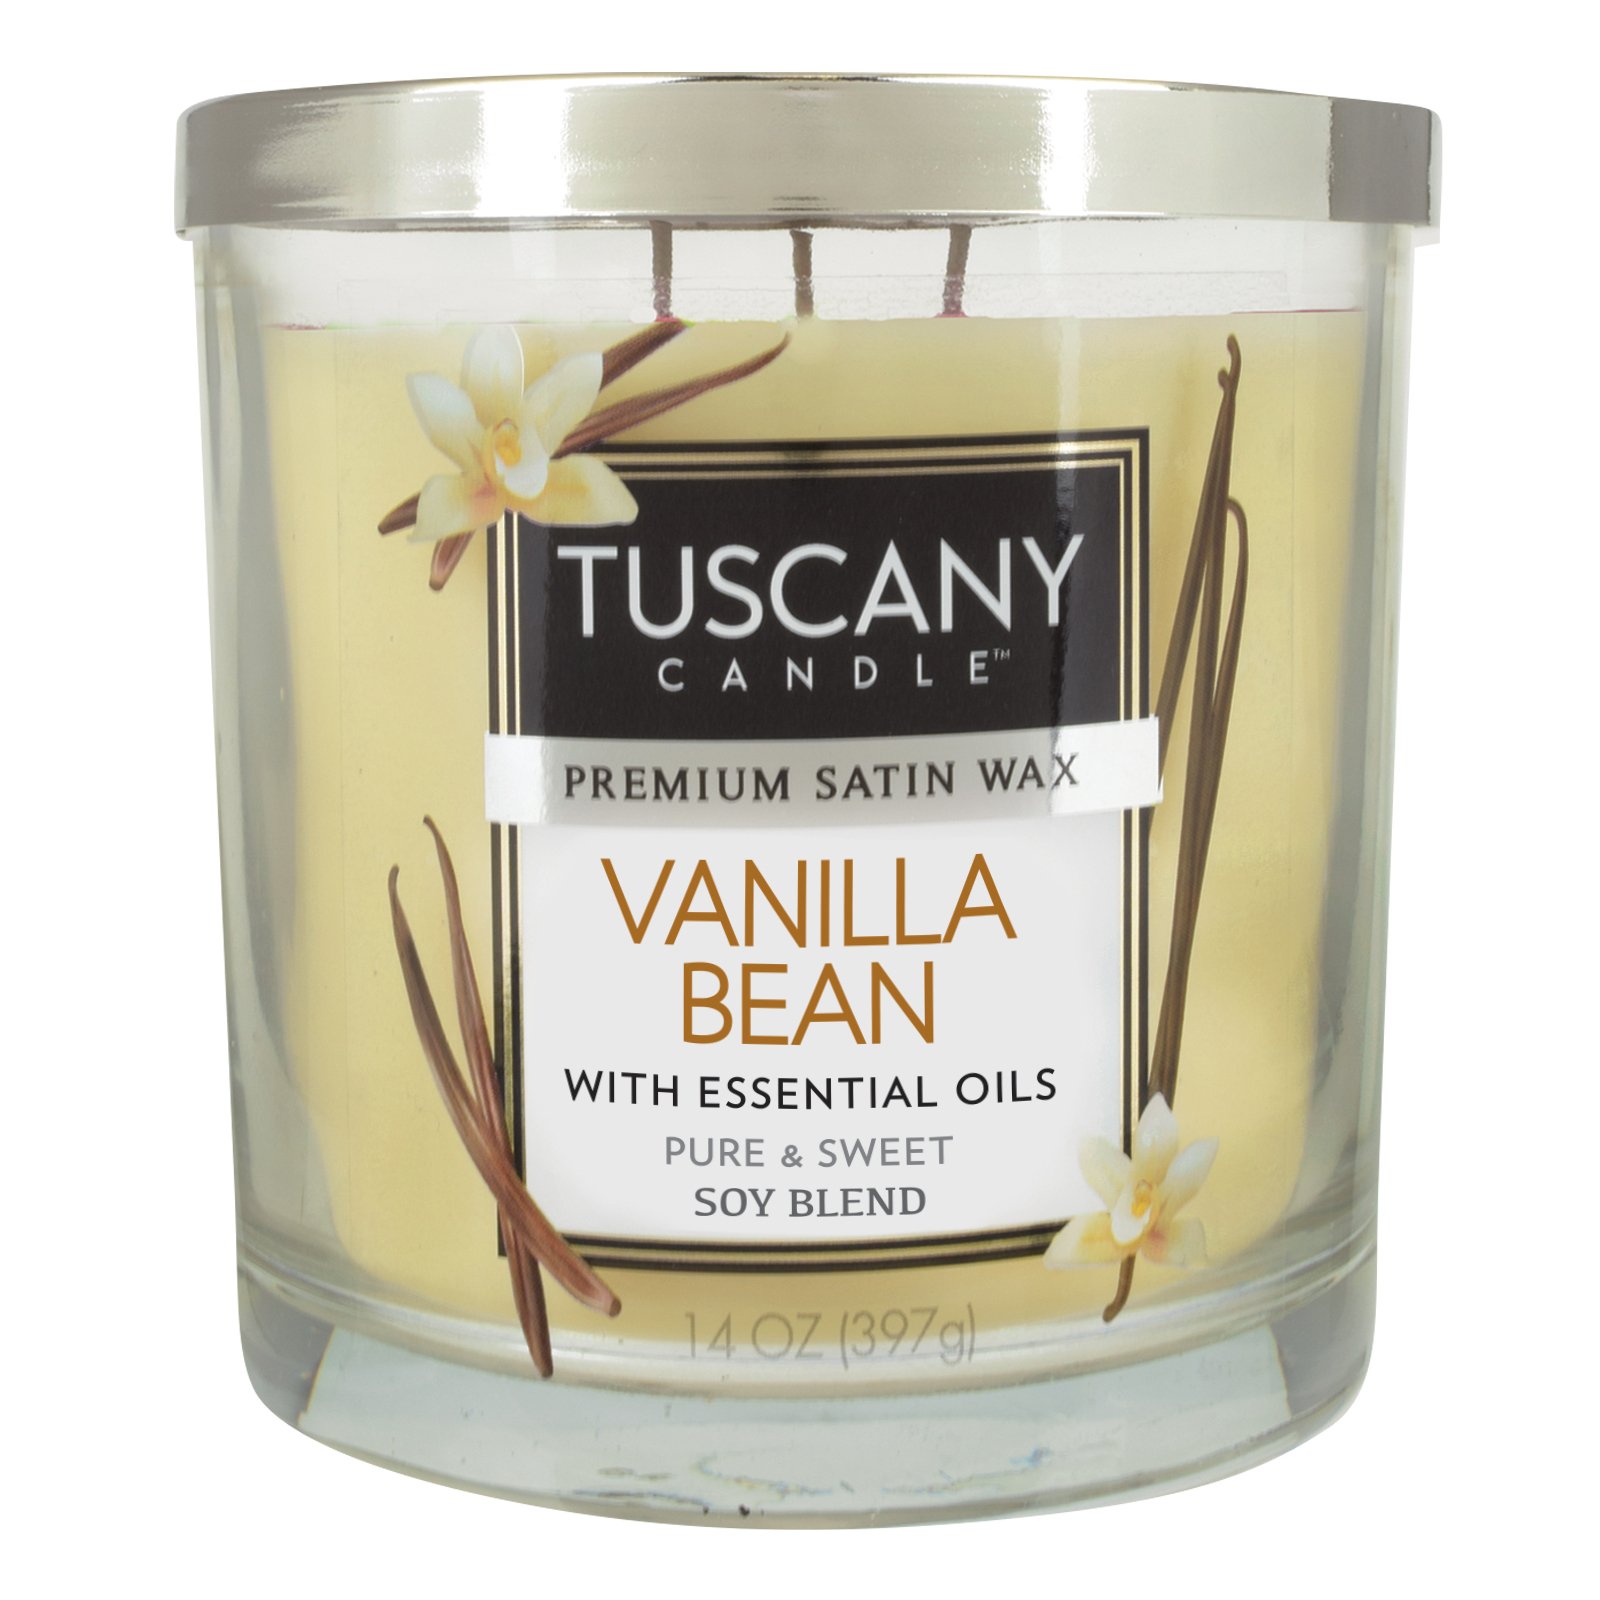 1 Tuscany Candle FRENCH VANILLA Sweet Marbled Wax 2-Wick Tumbler Large 18 oz 